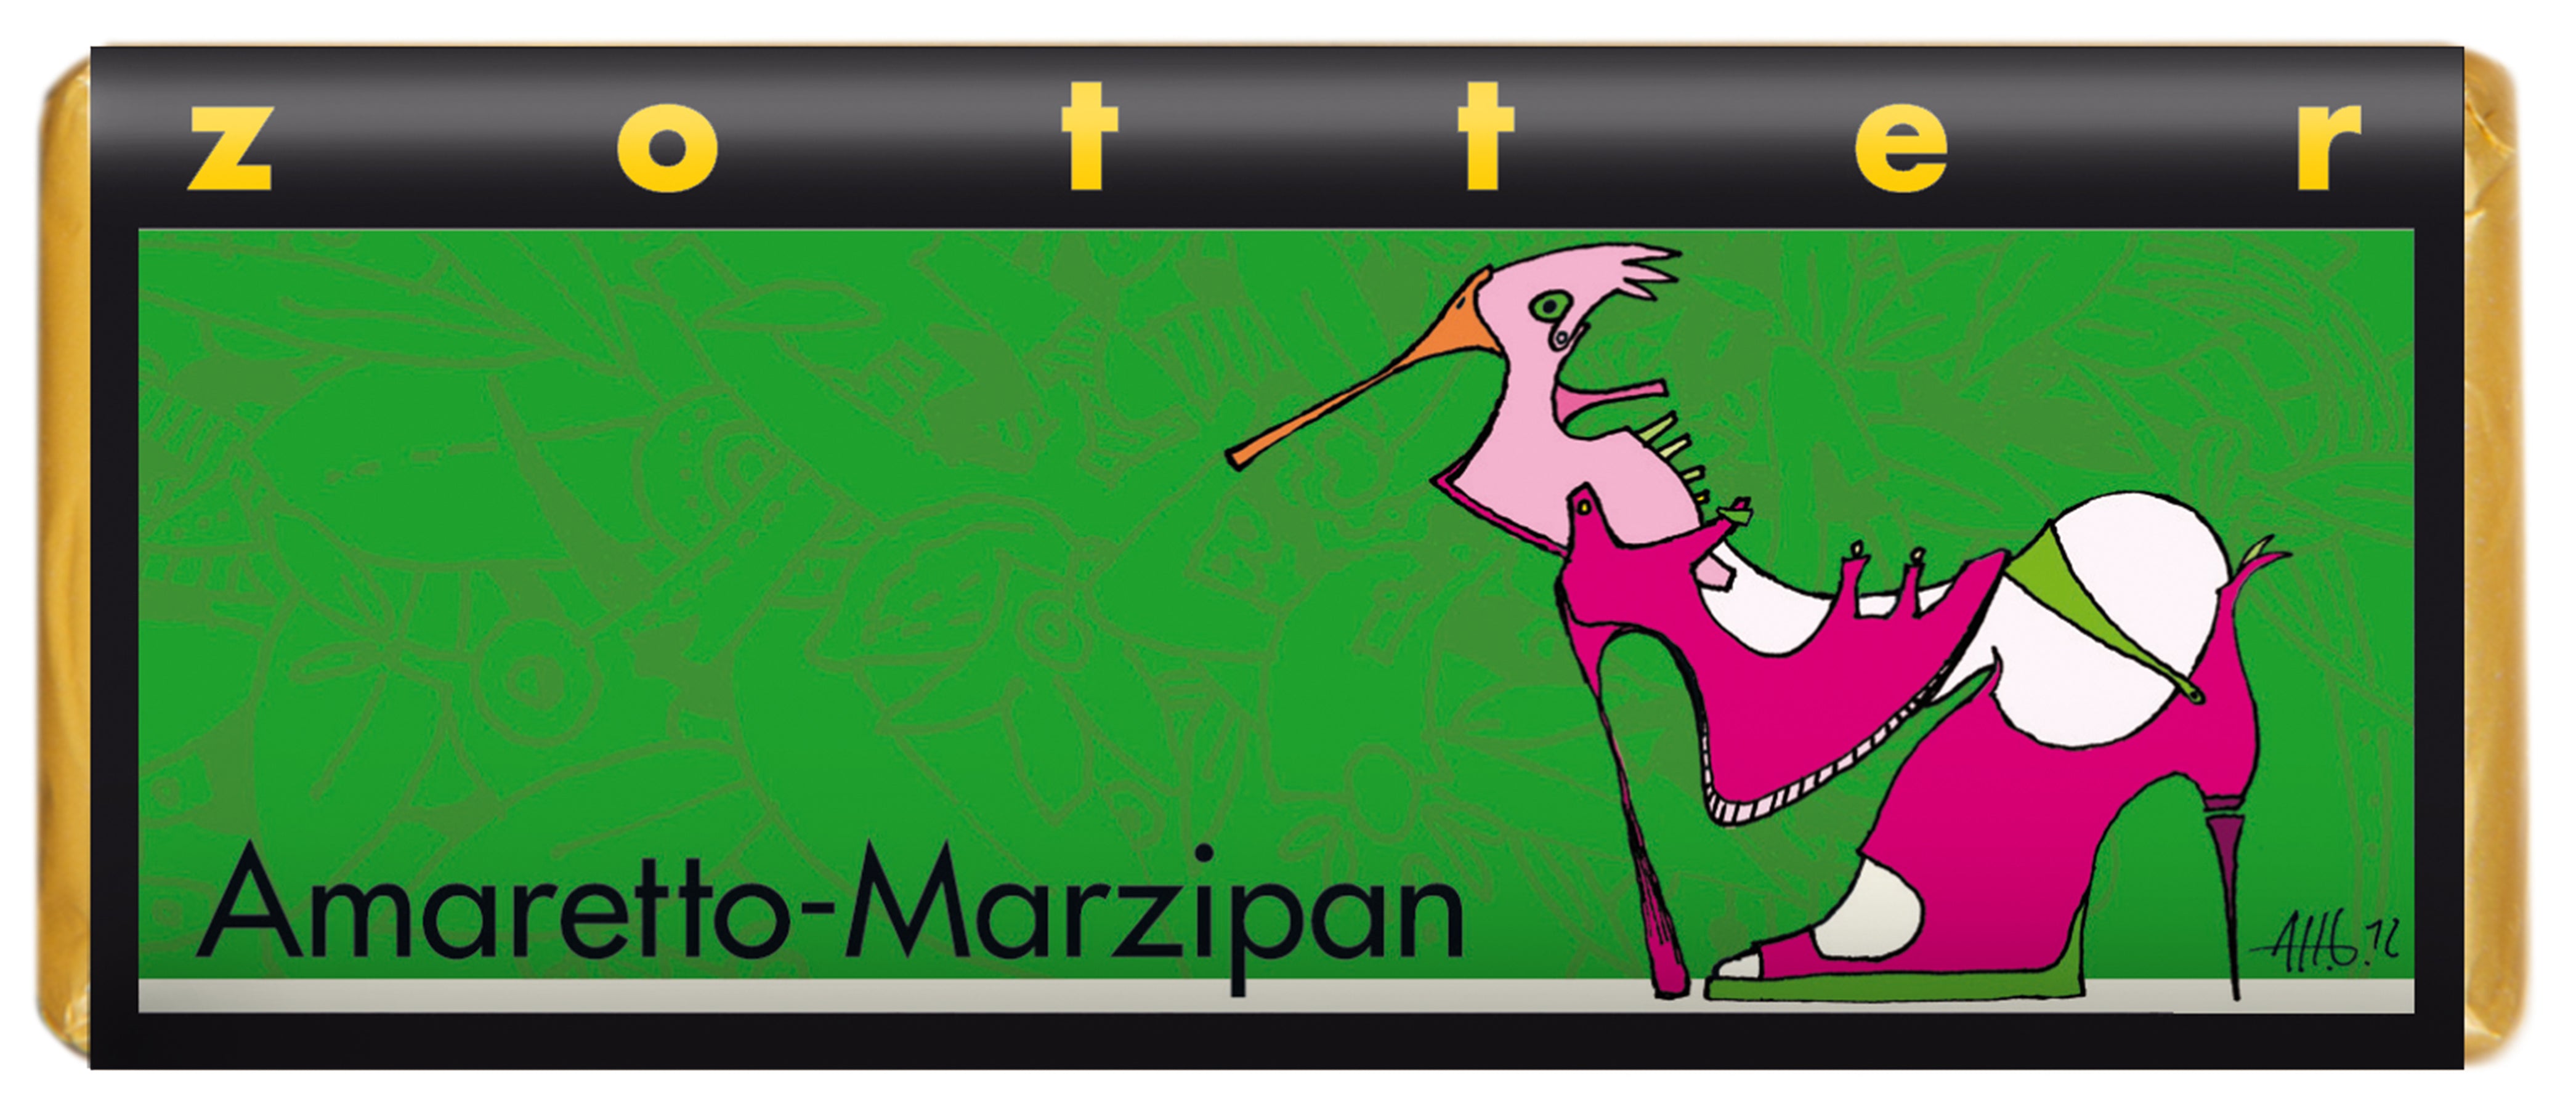 ZOTTER Amaretto-Marzipan 60% - 70 g